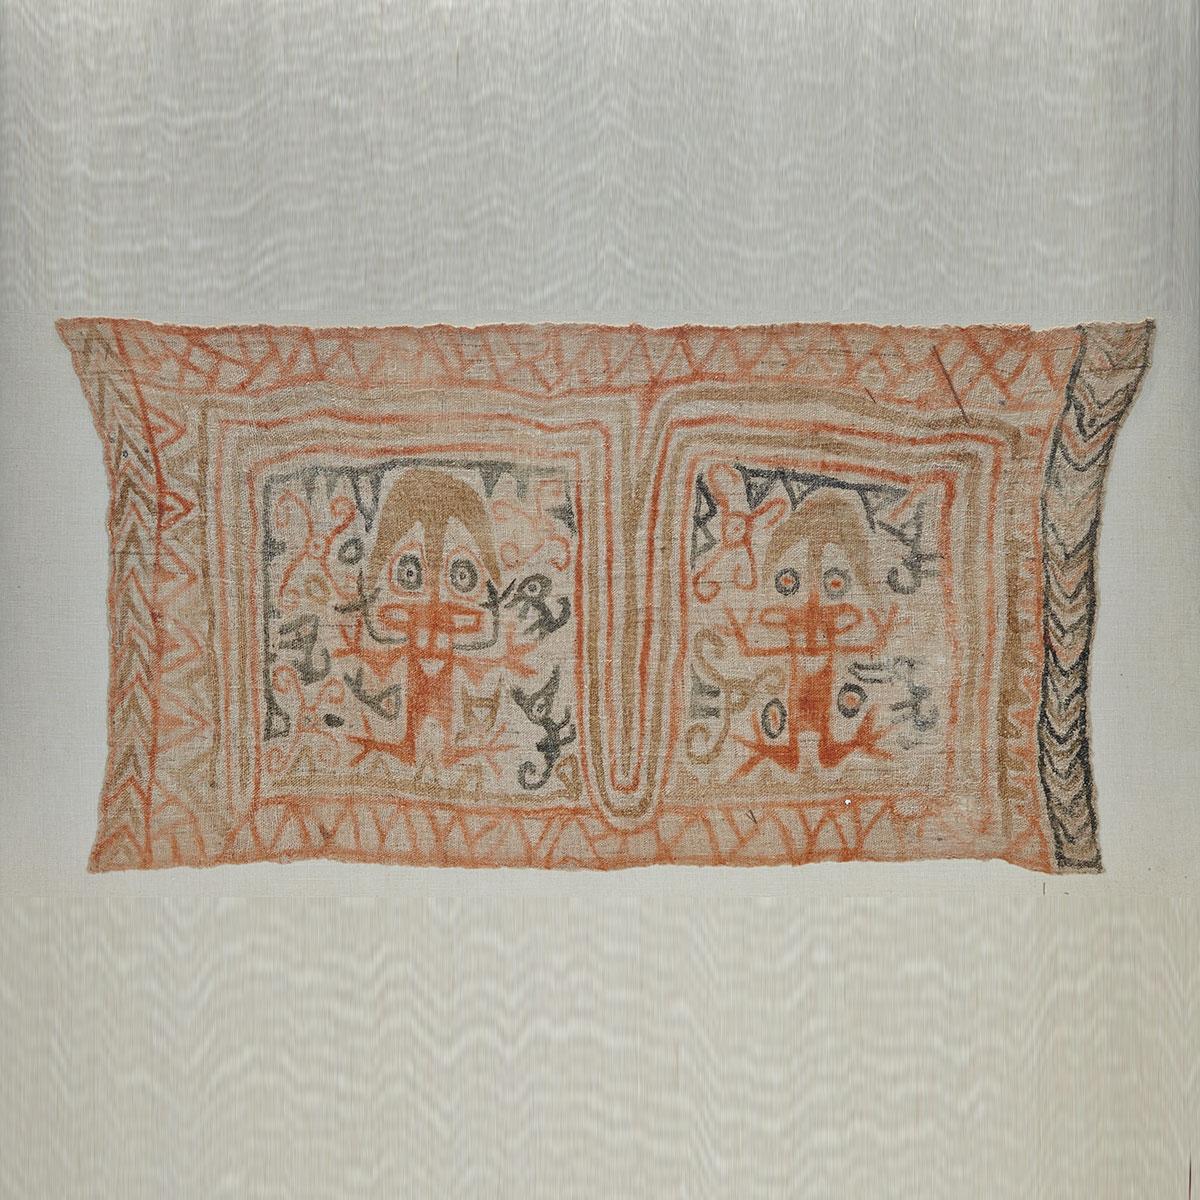 Papua New Guinea Textile, 19th century